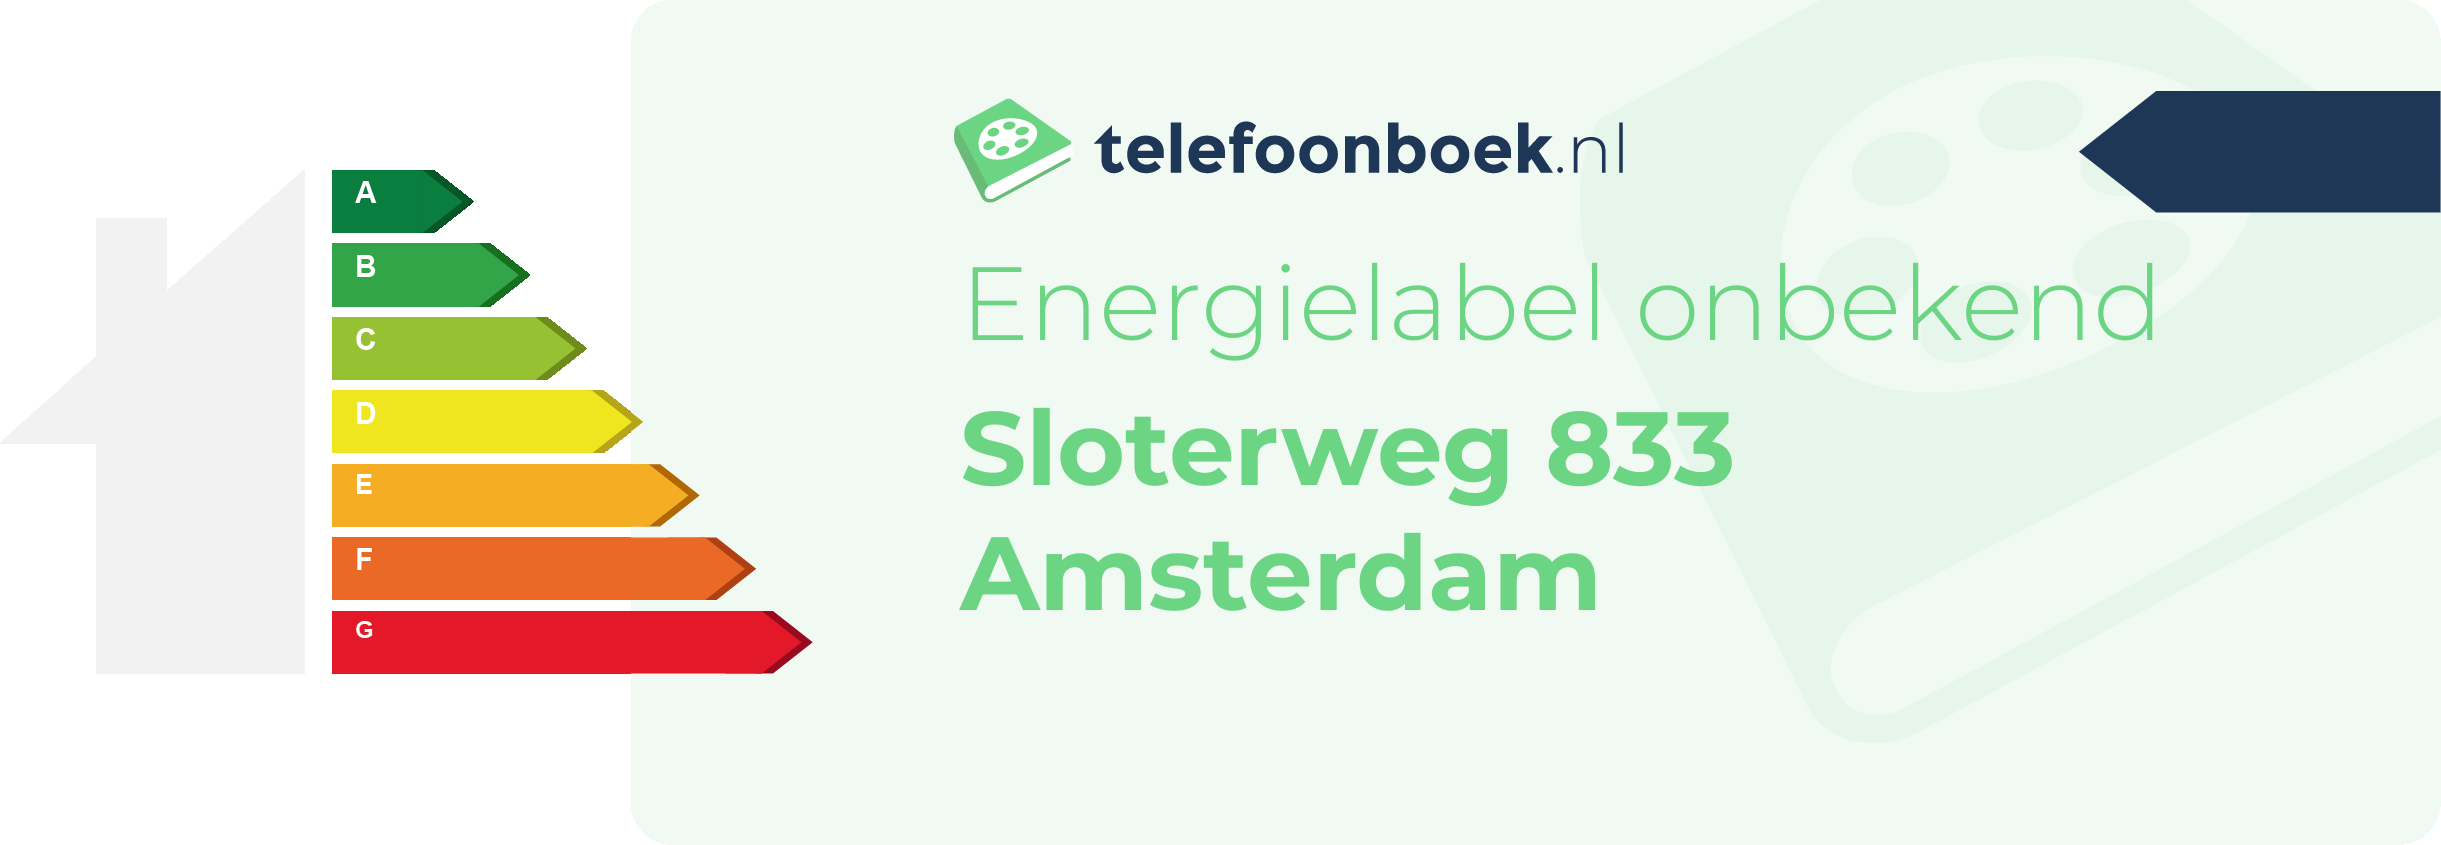 Energielabel Sloterweg 833 Amsterdam